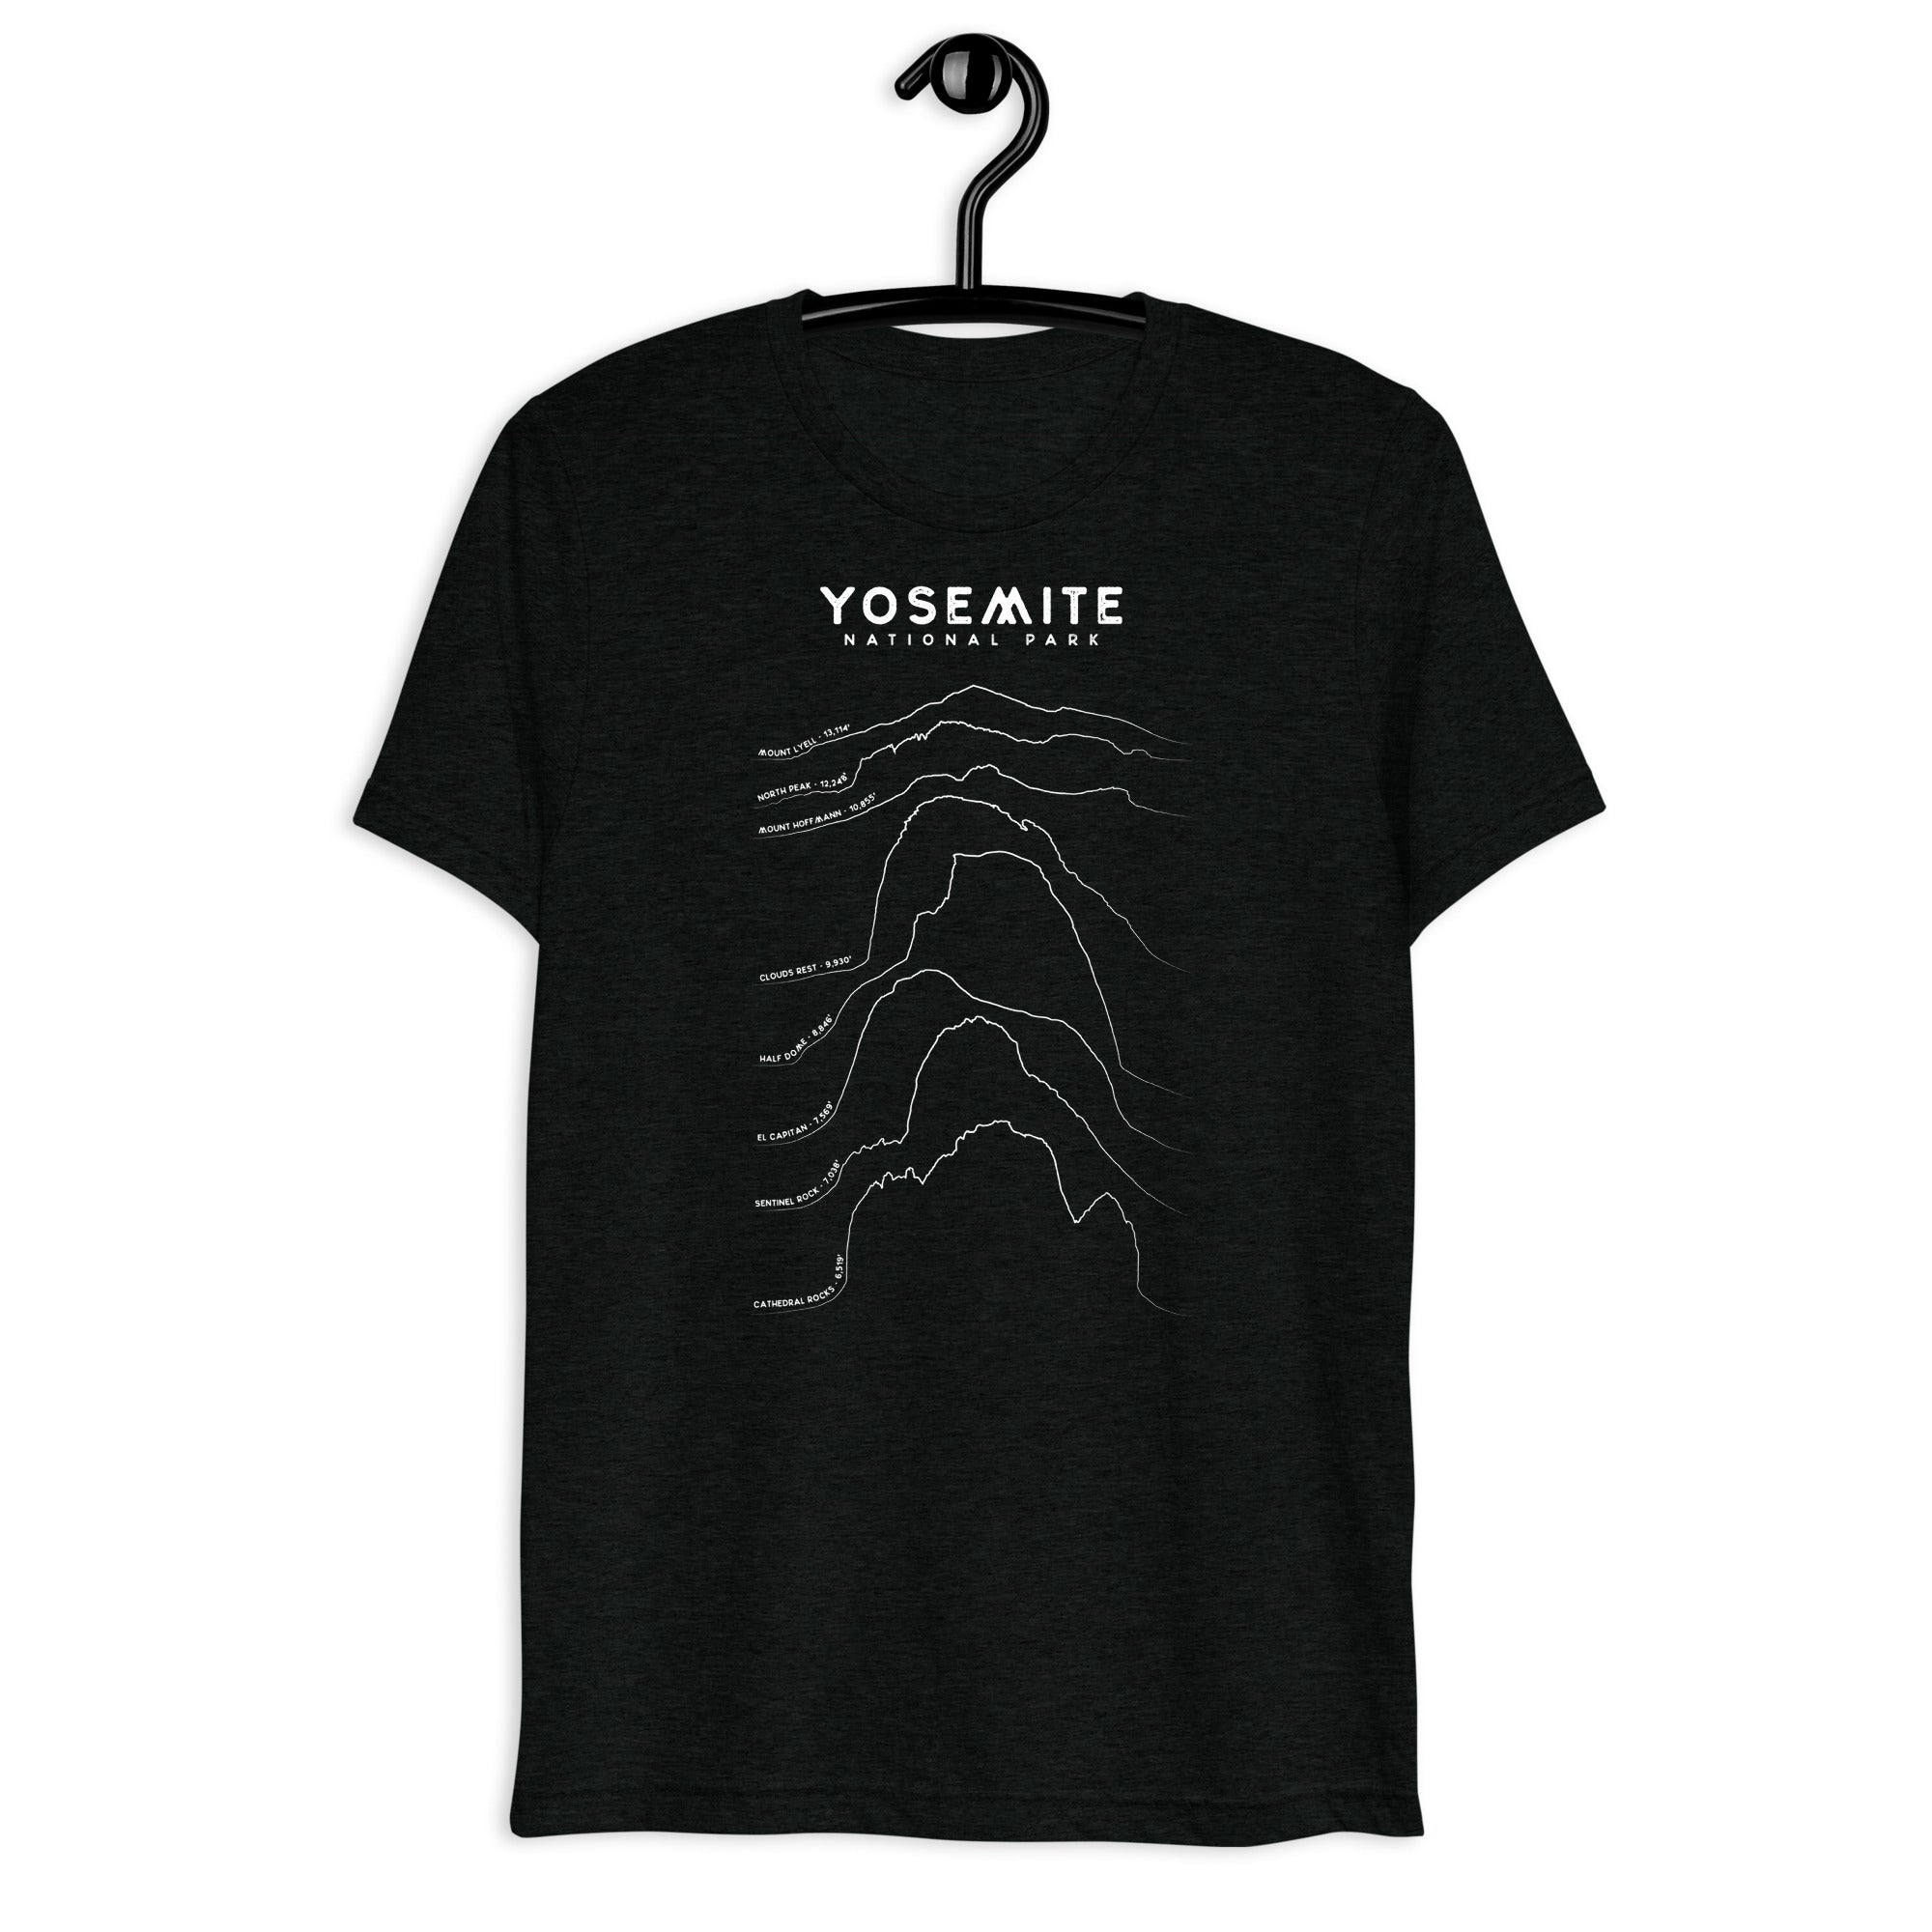 Yosemite Short Sleeve Shirt